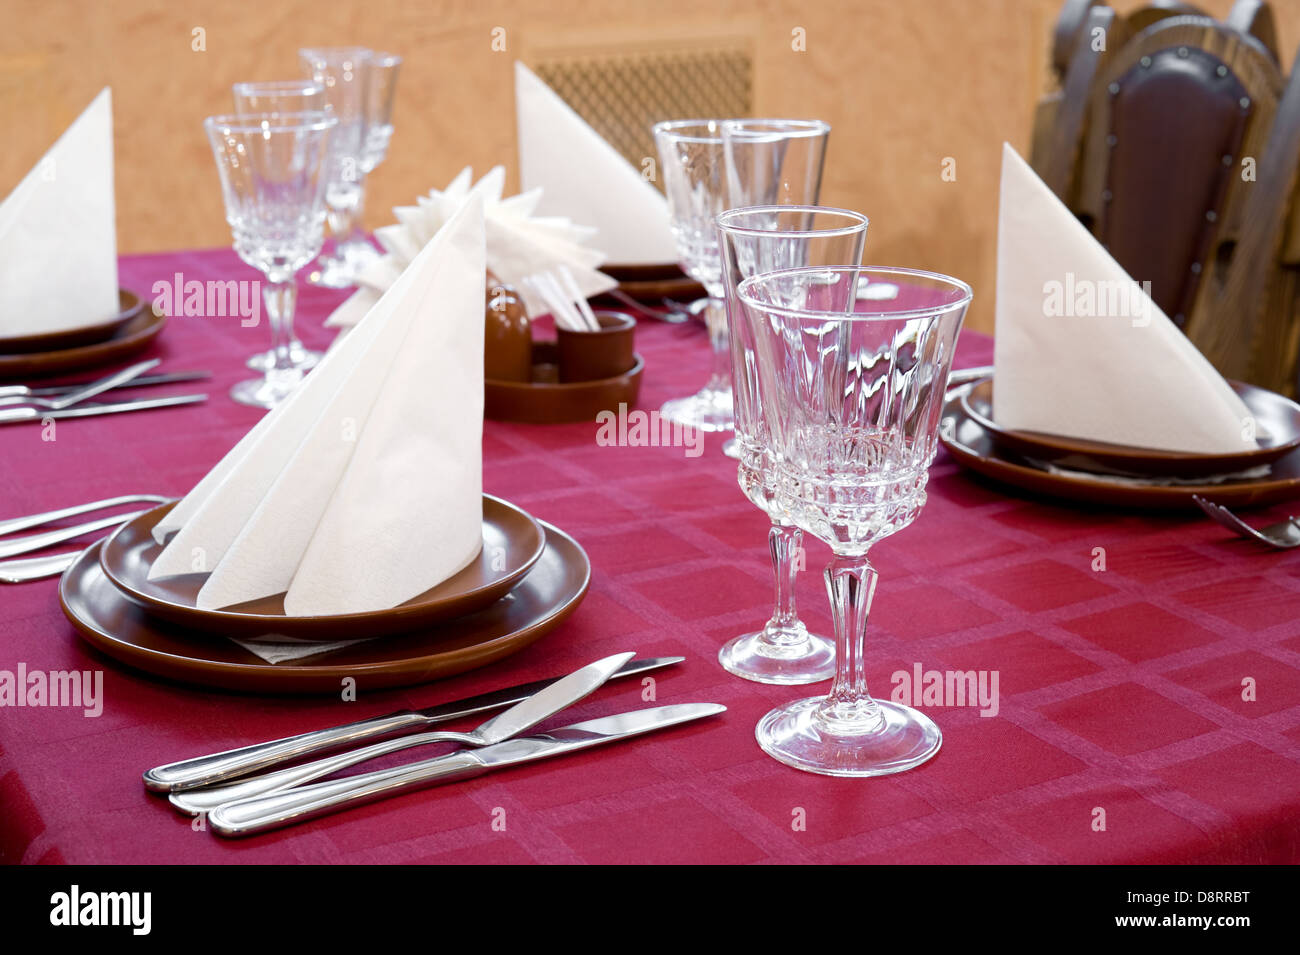 restaurant laid table Stock Photo